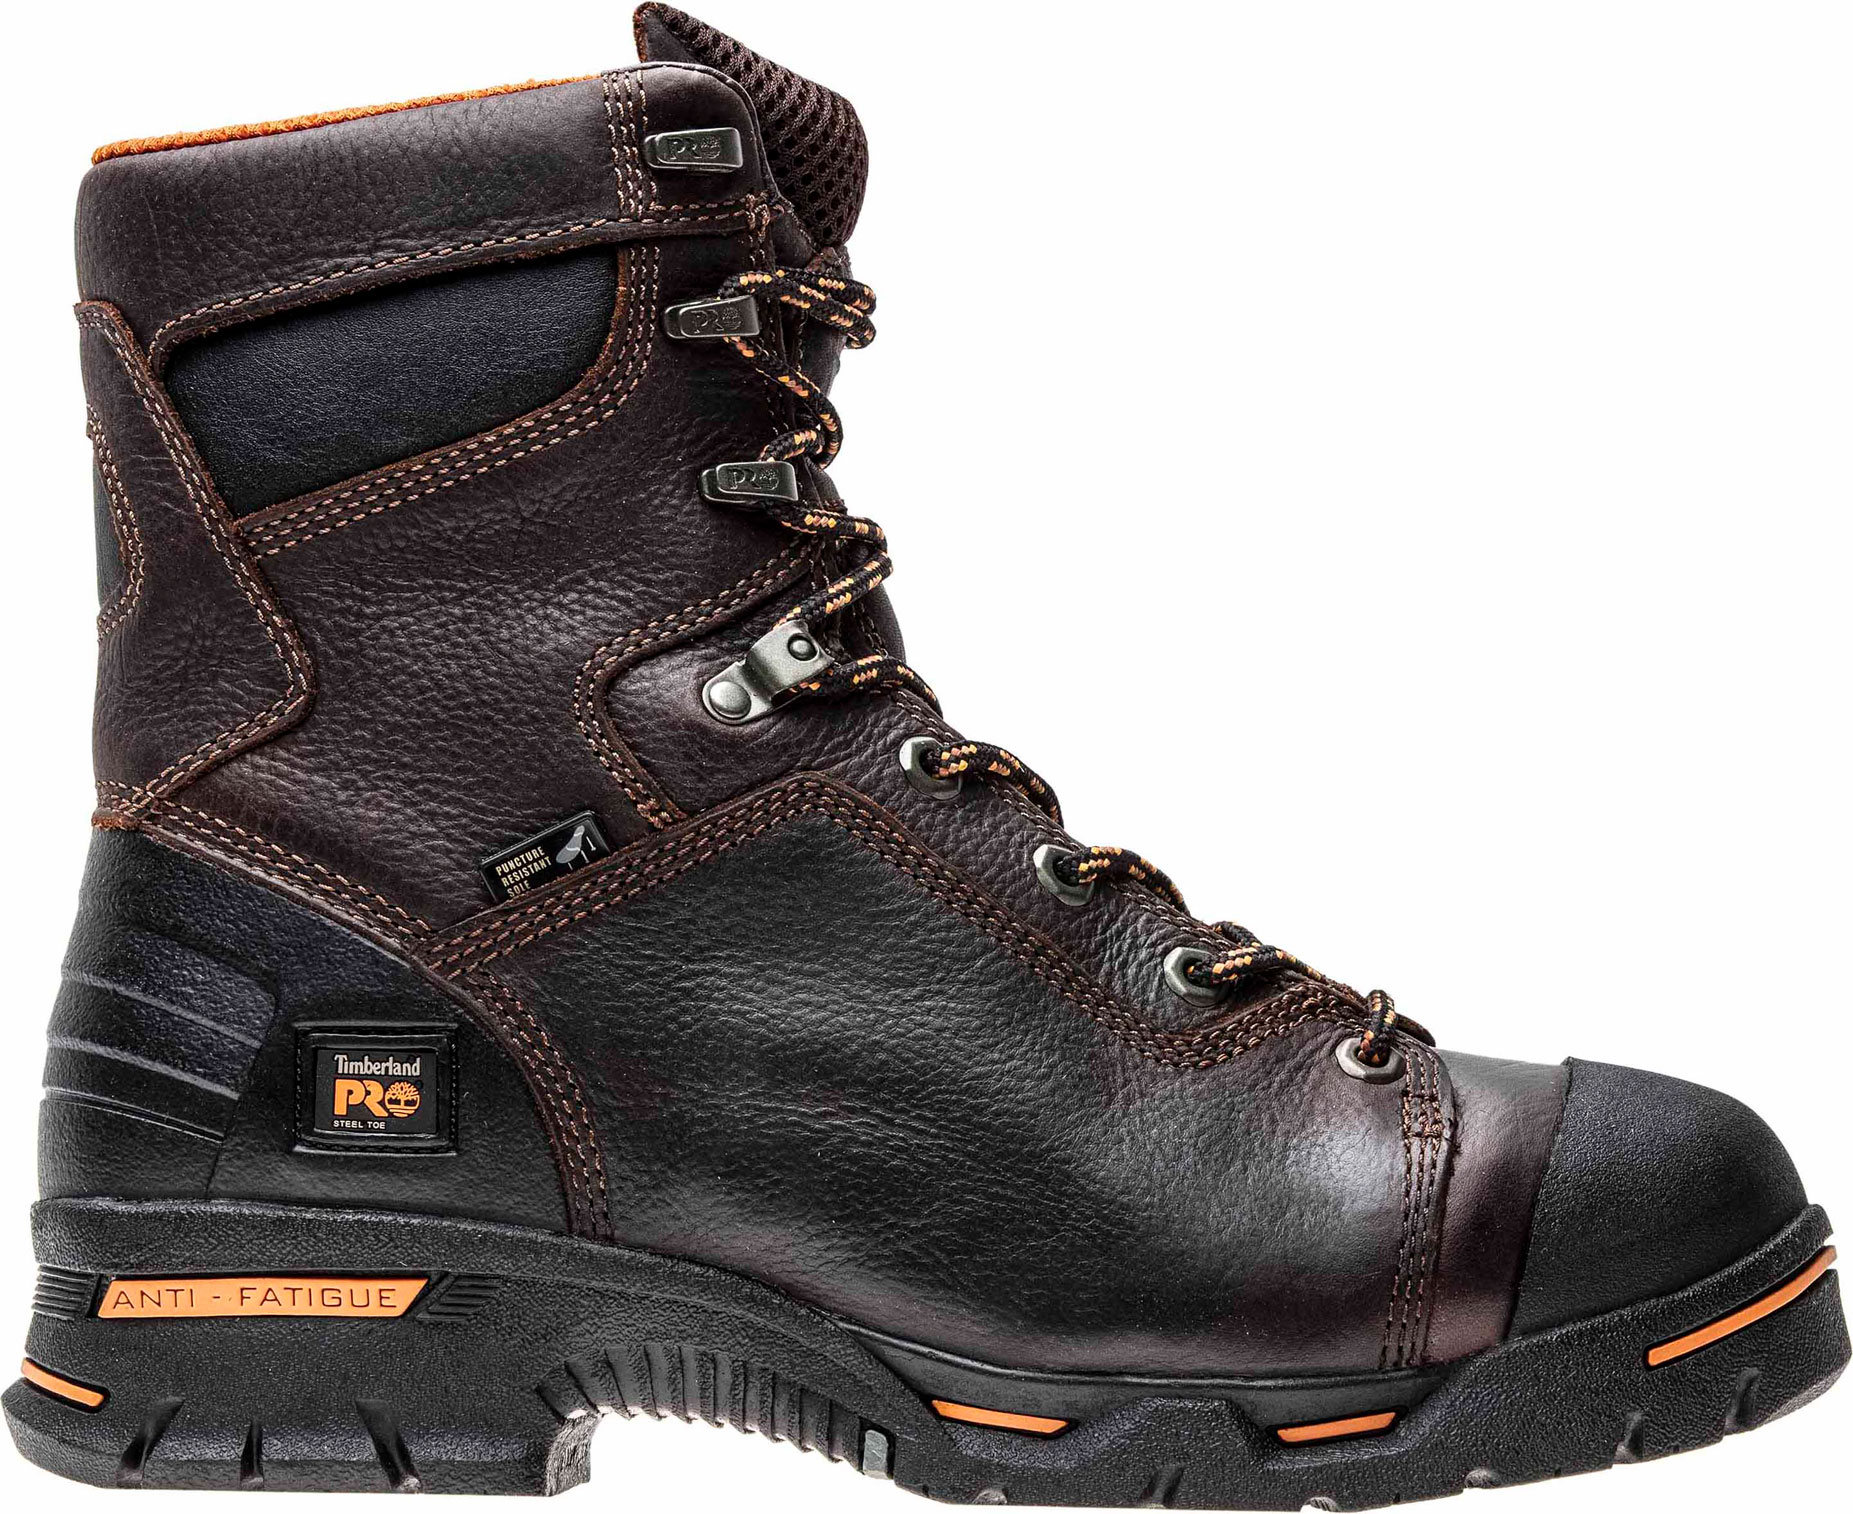 TM52561 Timberland PRO Endurance 8 Inch Brown Steel Toe Boot